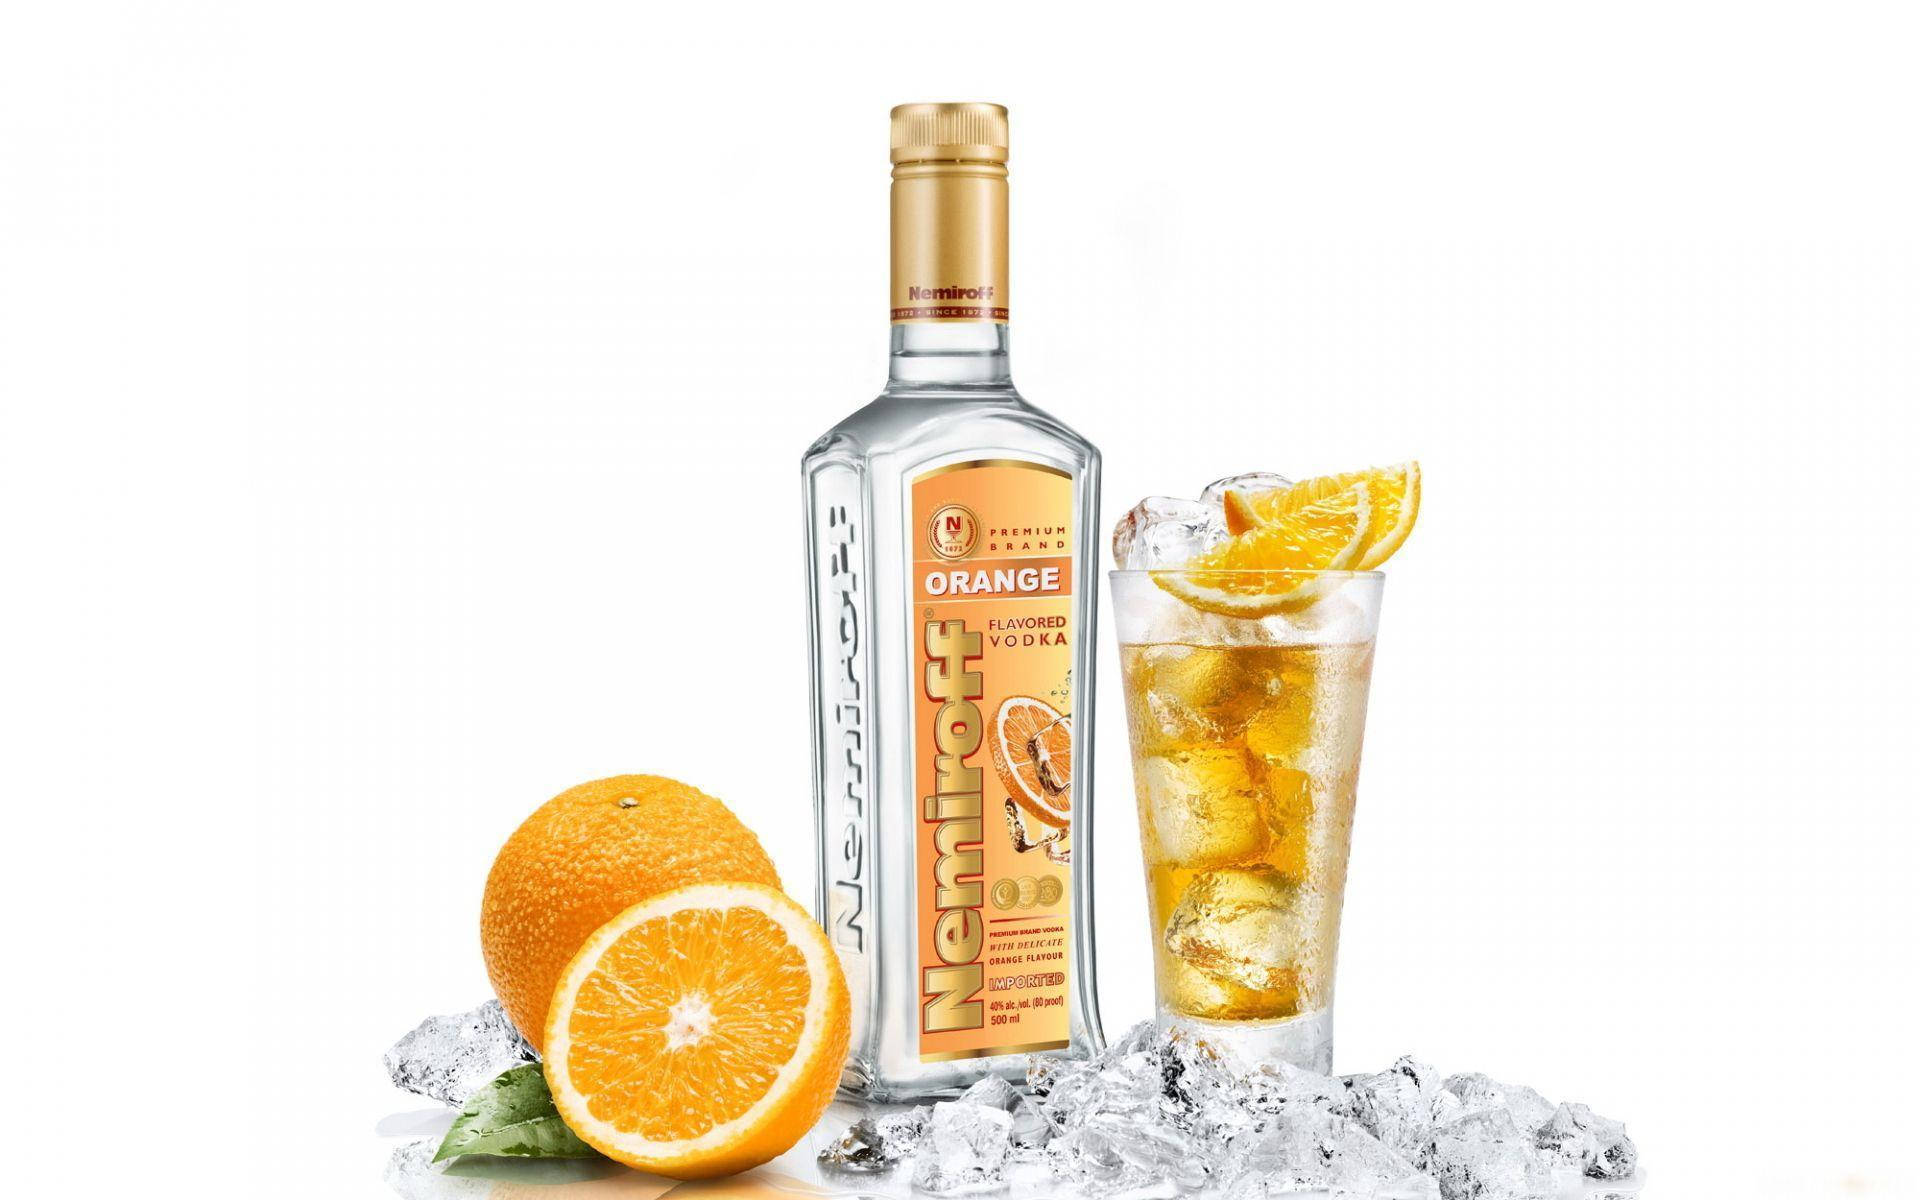 Nemiroff Orange Vodka Bottle And Drink Wallpaper